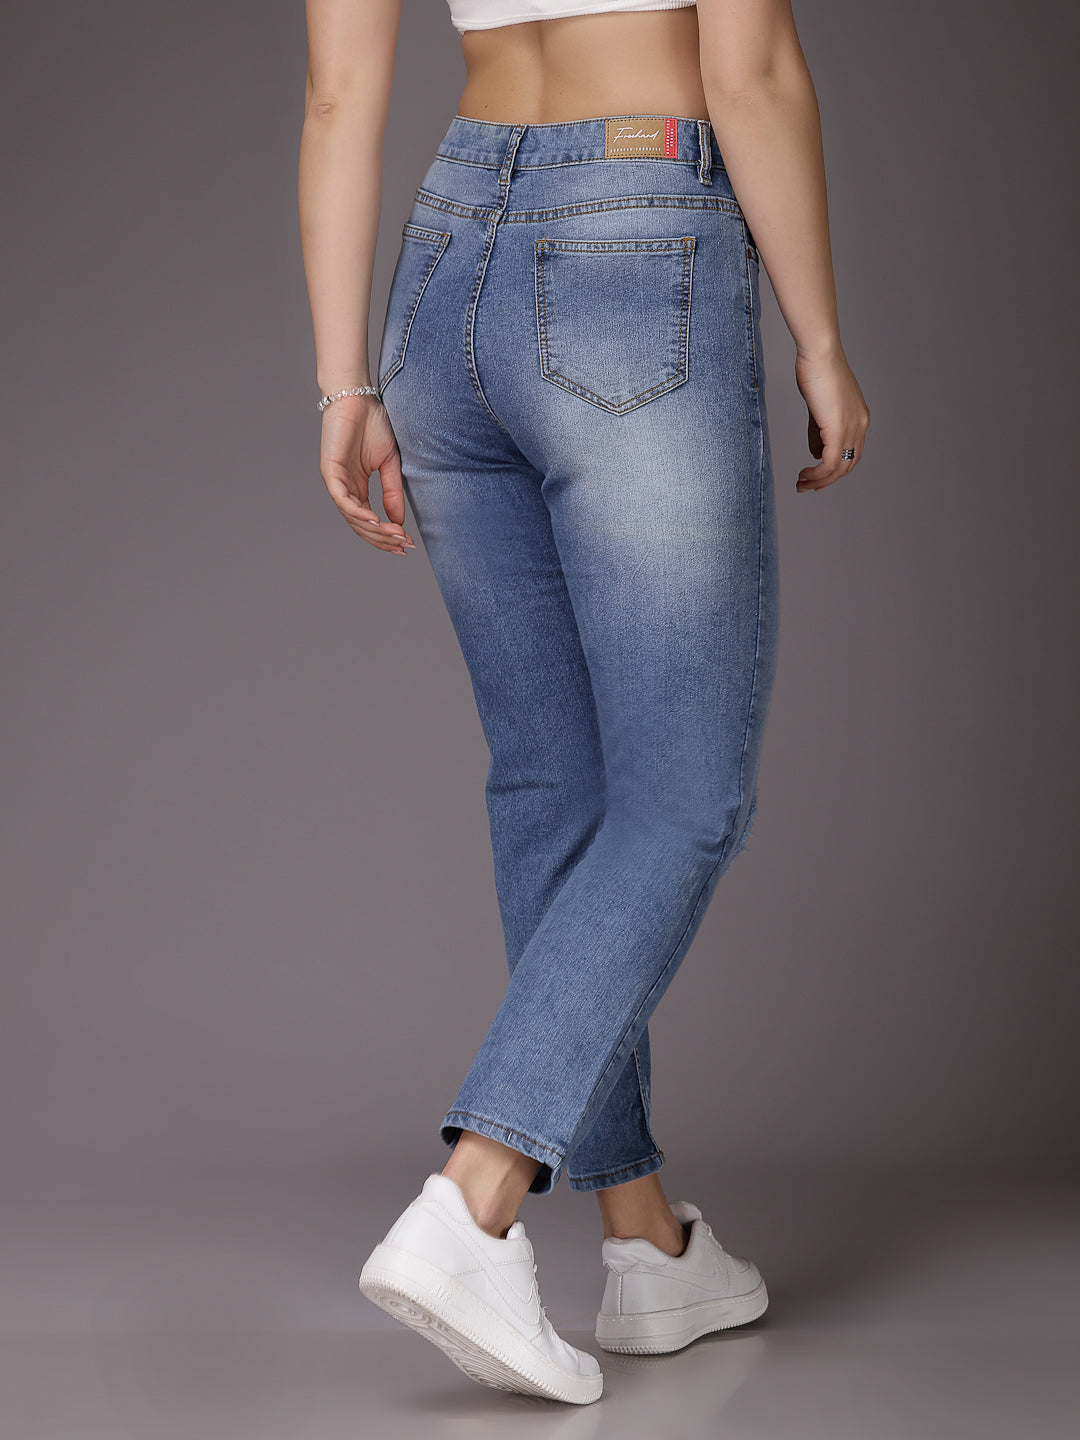 Shop Women Straight Fit Jeans Online.